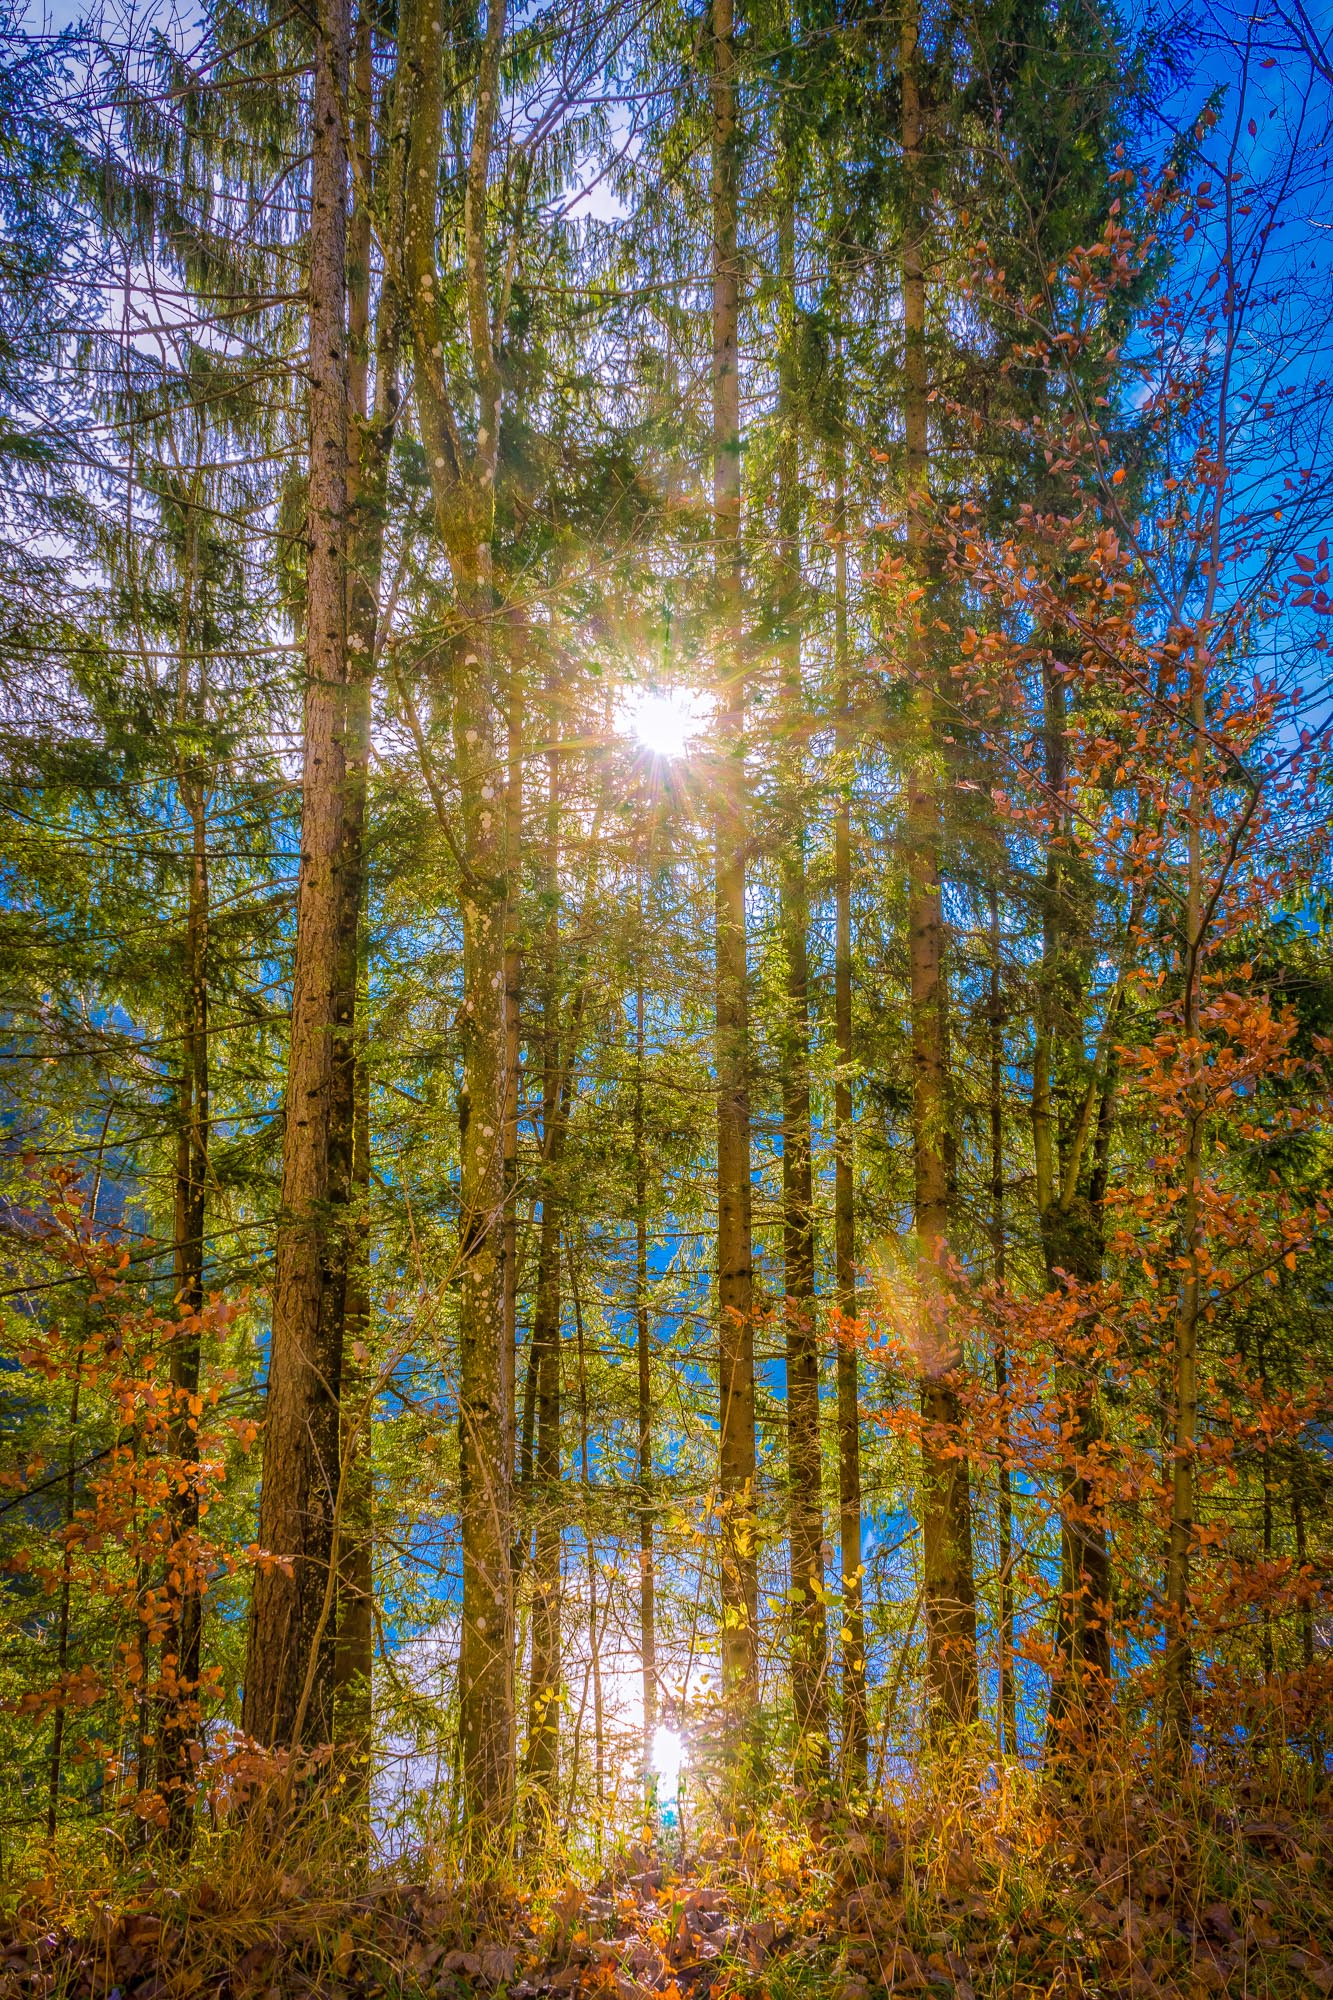 Sun among the trees